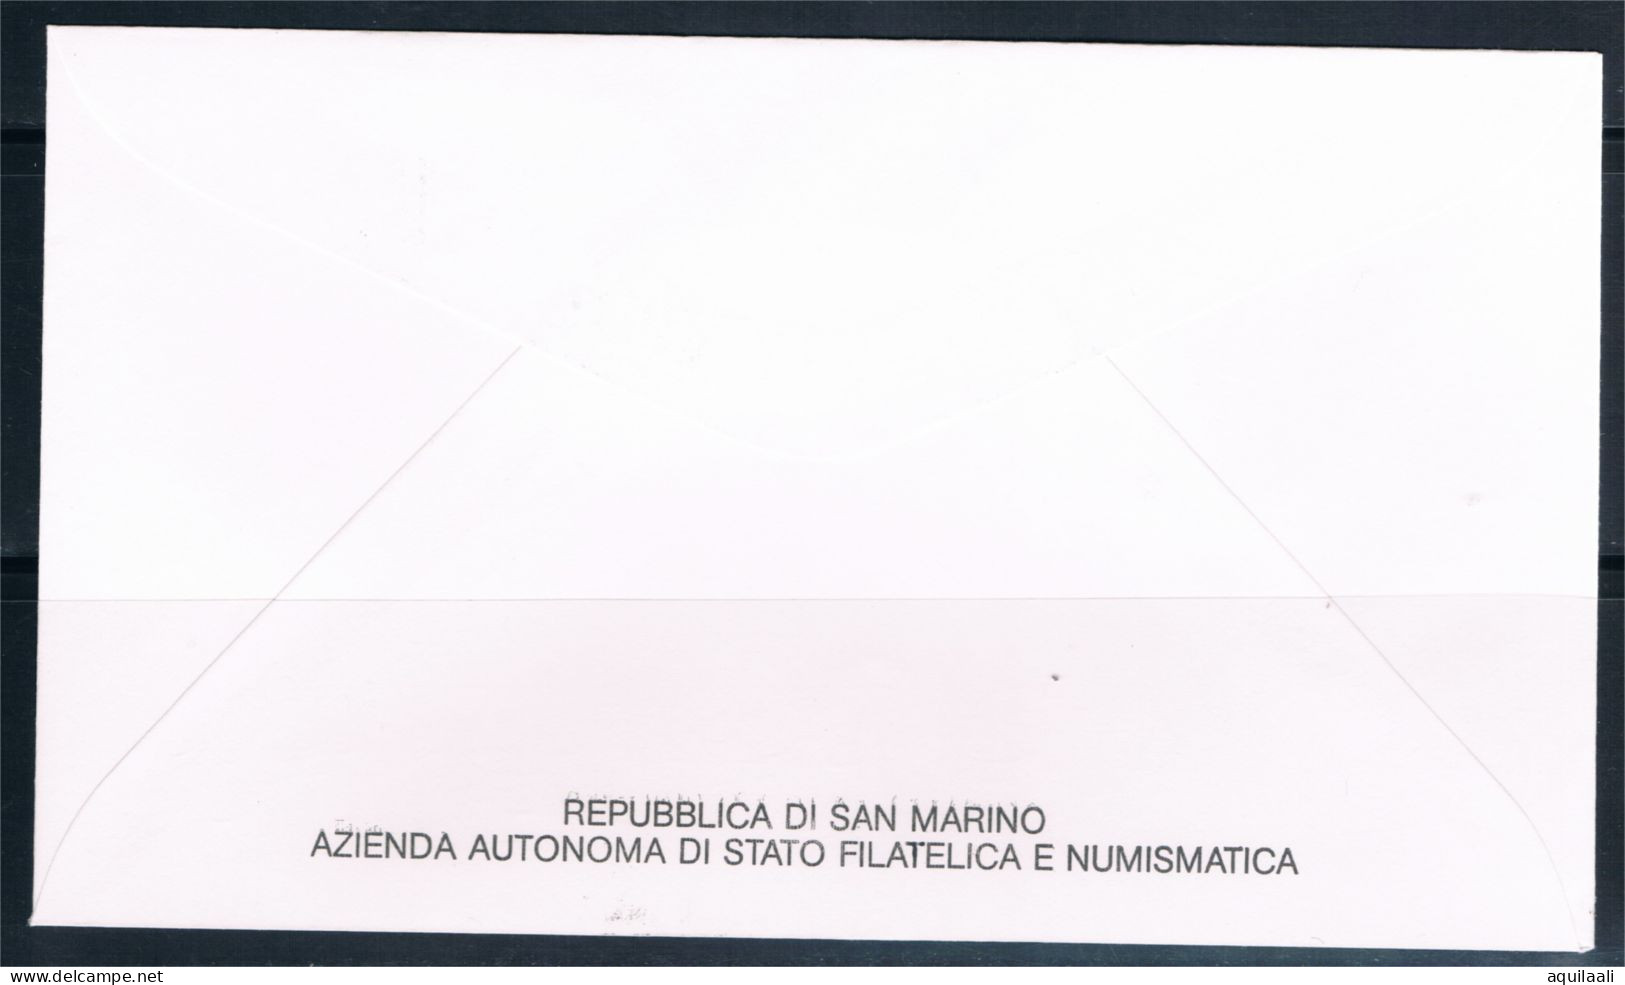 SAN MARINO 1989 - Expo Filatelico "Imola 89", Annullo Speciale. - Expositions Philatéliques